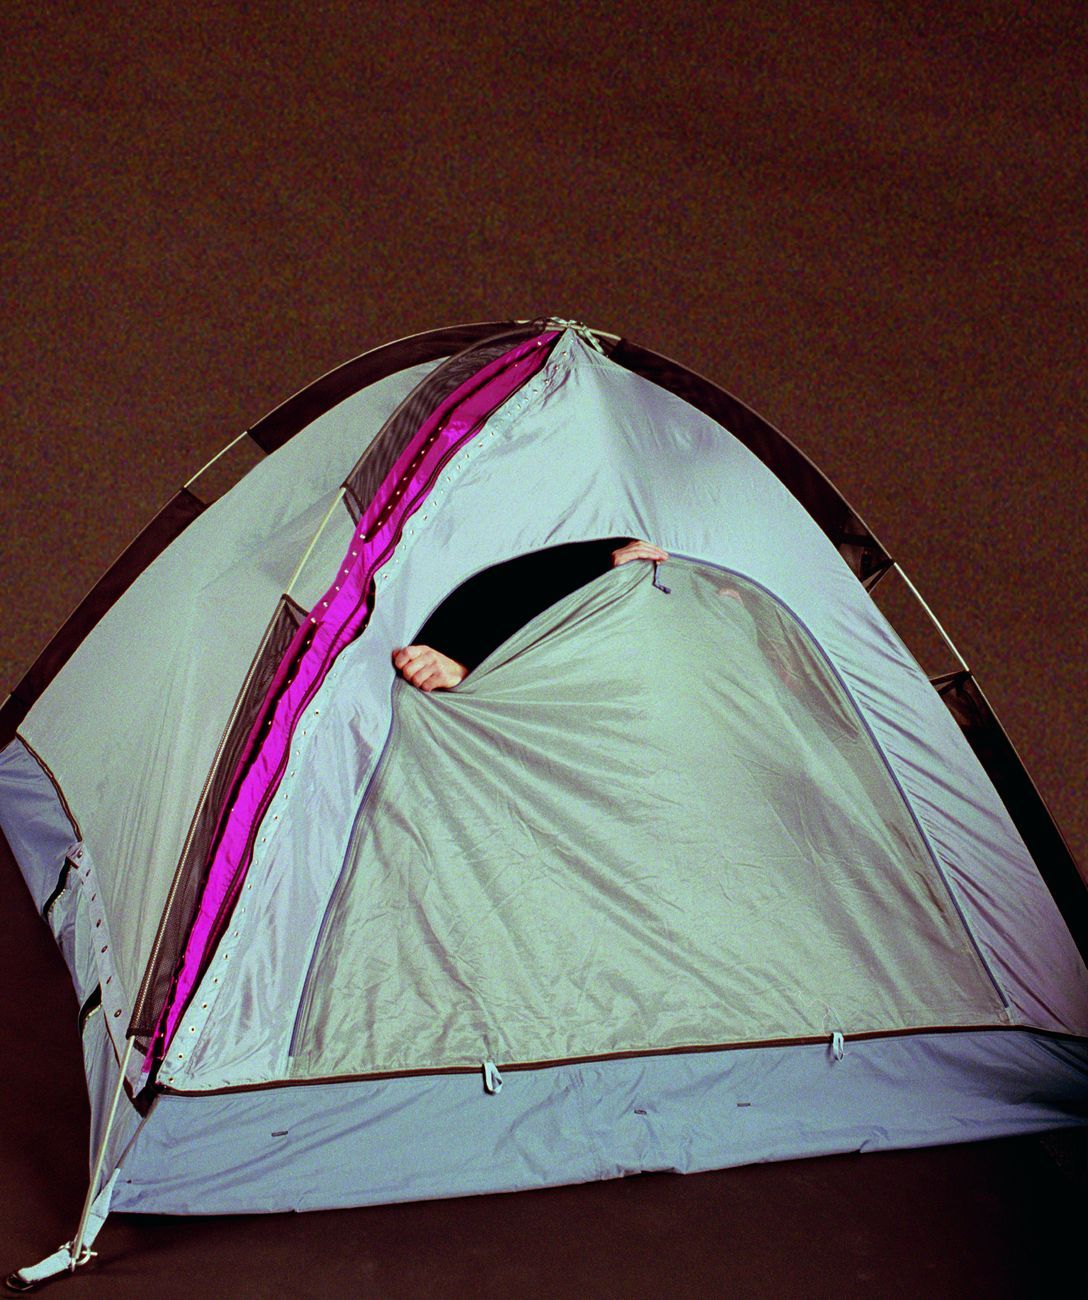 Alicia Framis, One night tent, 2002